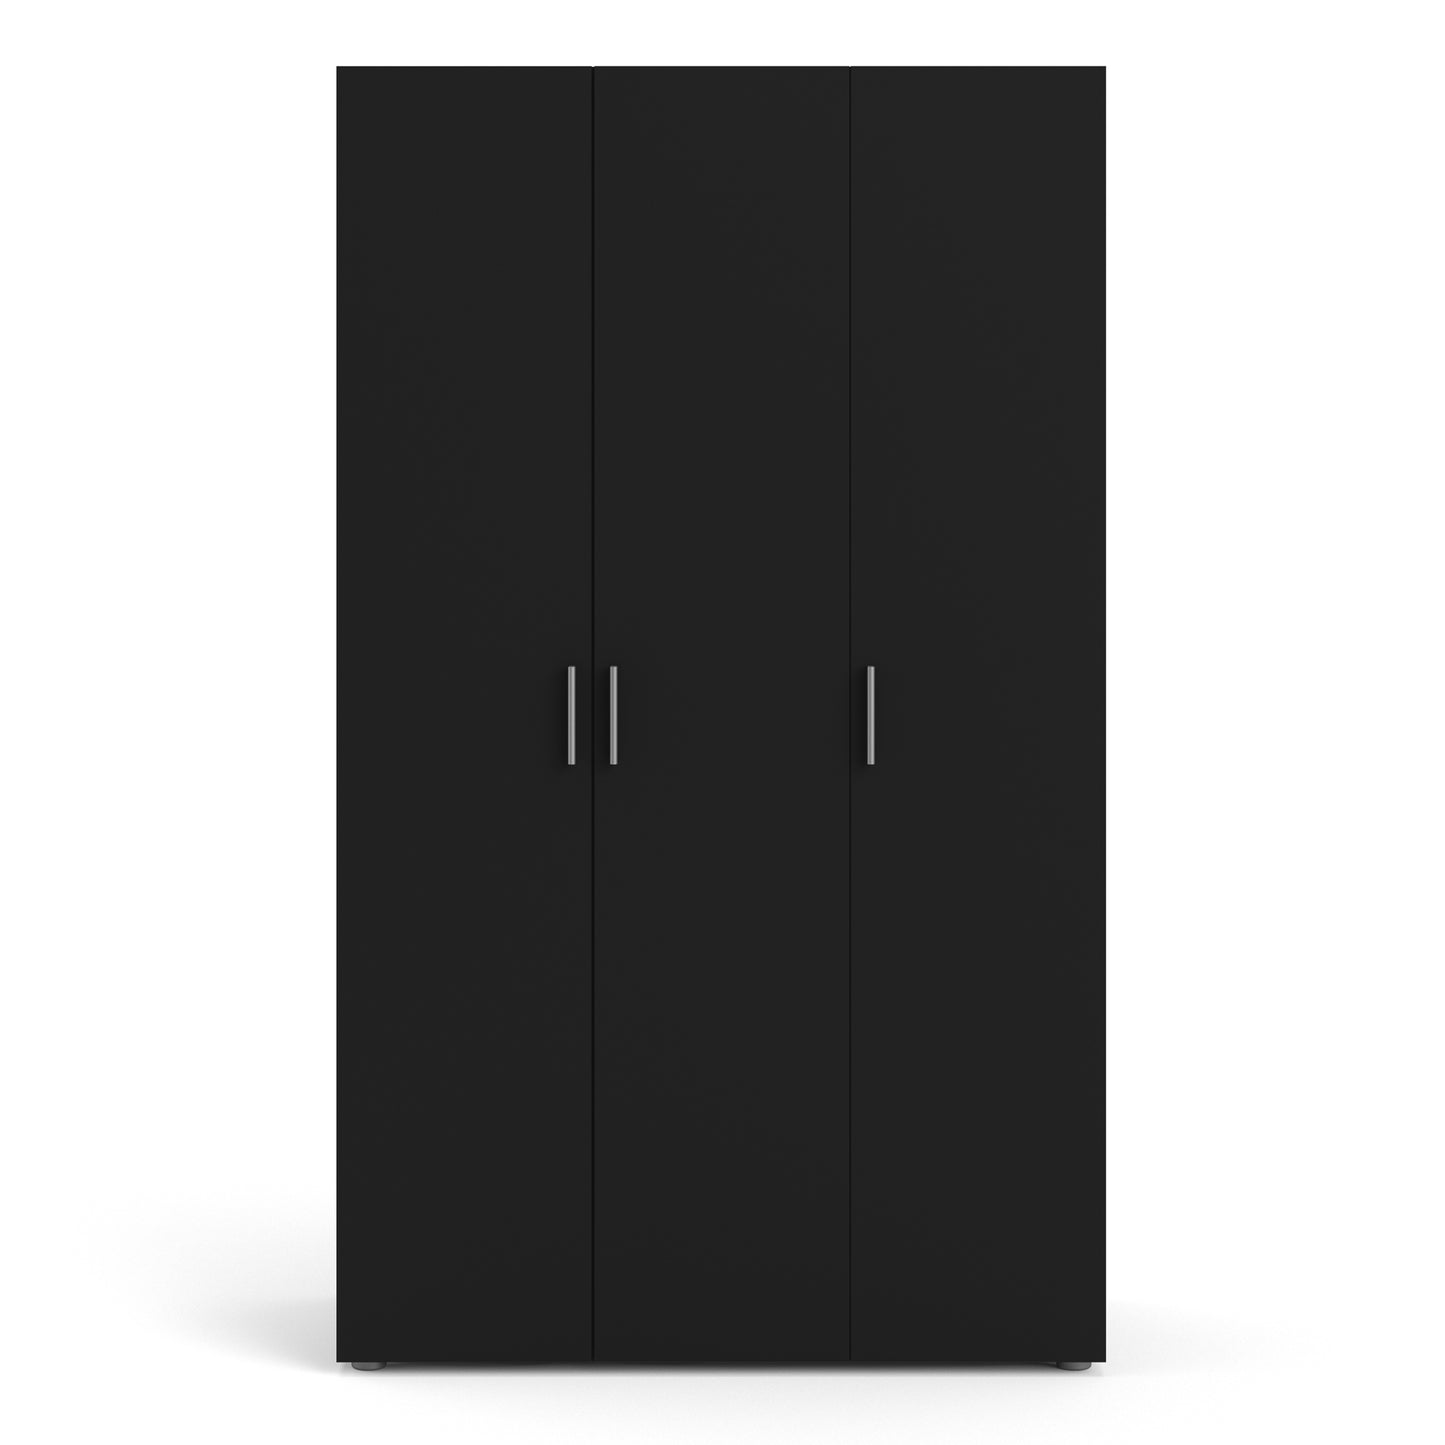 Pepe  Wardrobe with 3 doors in Black